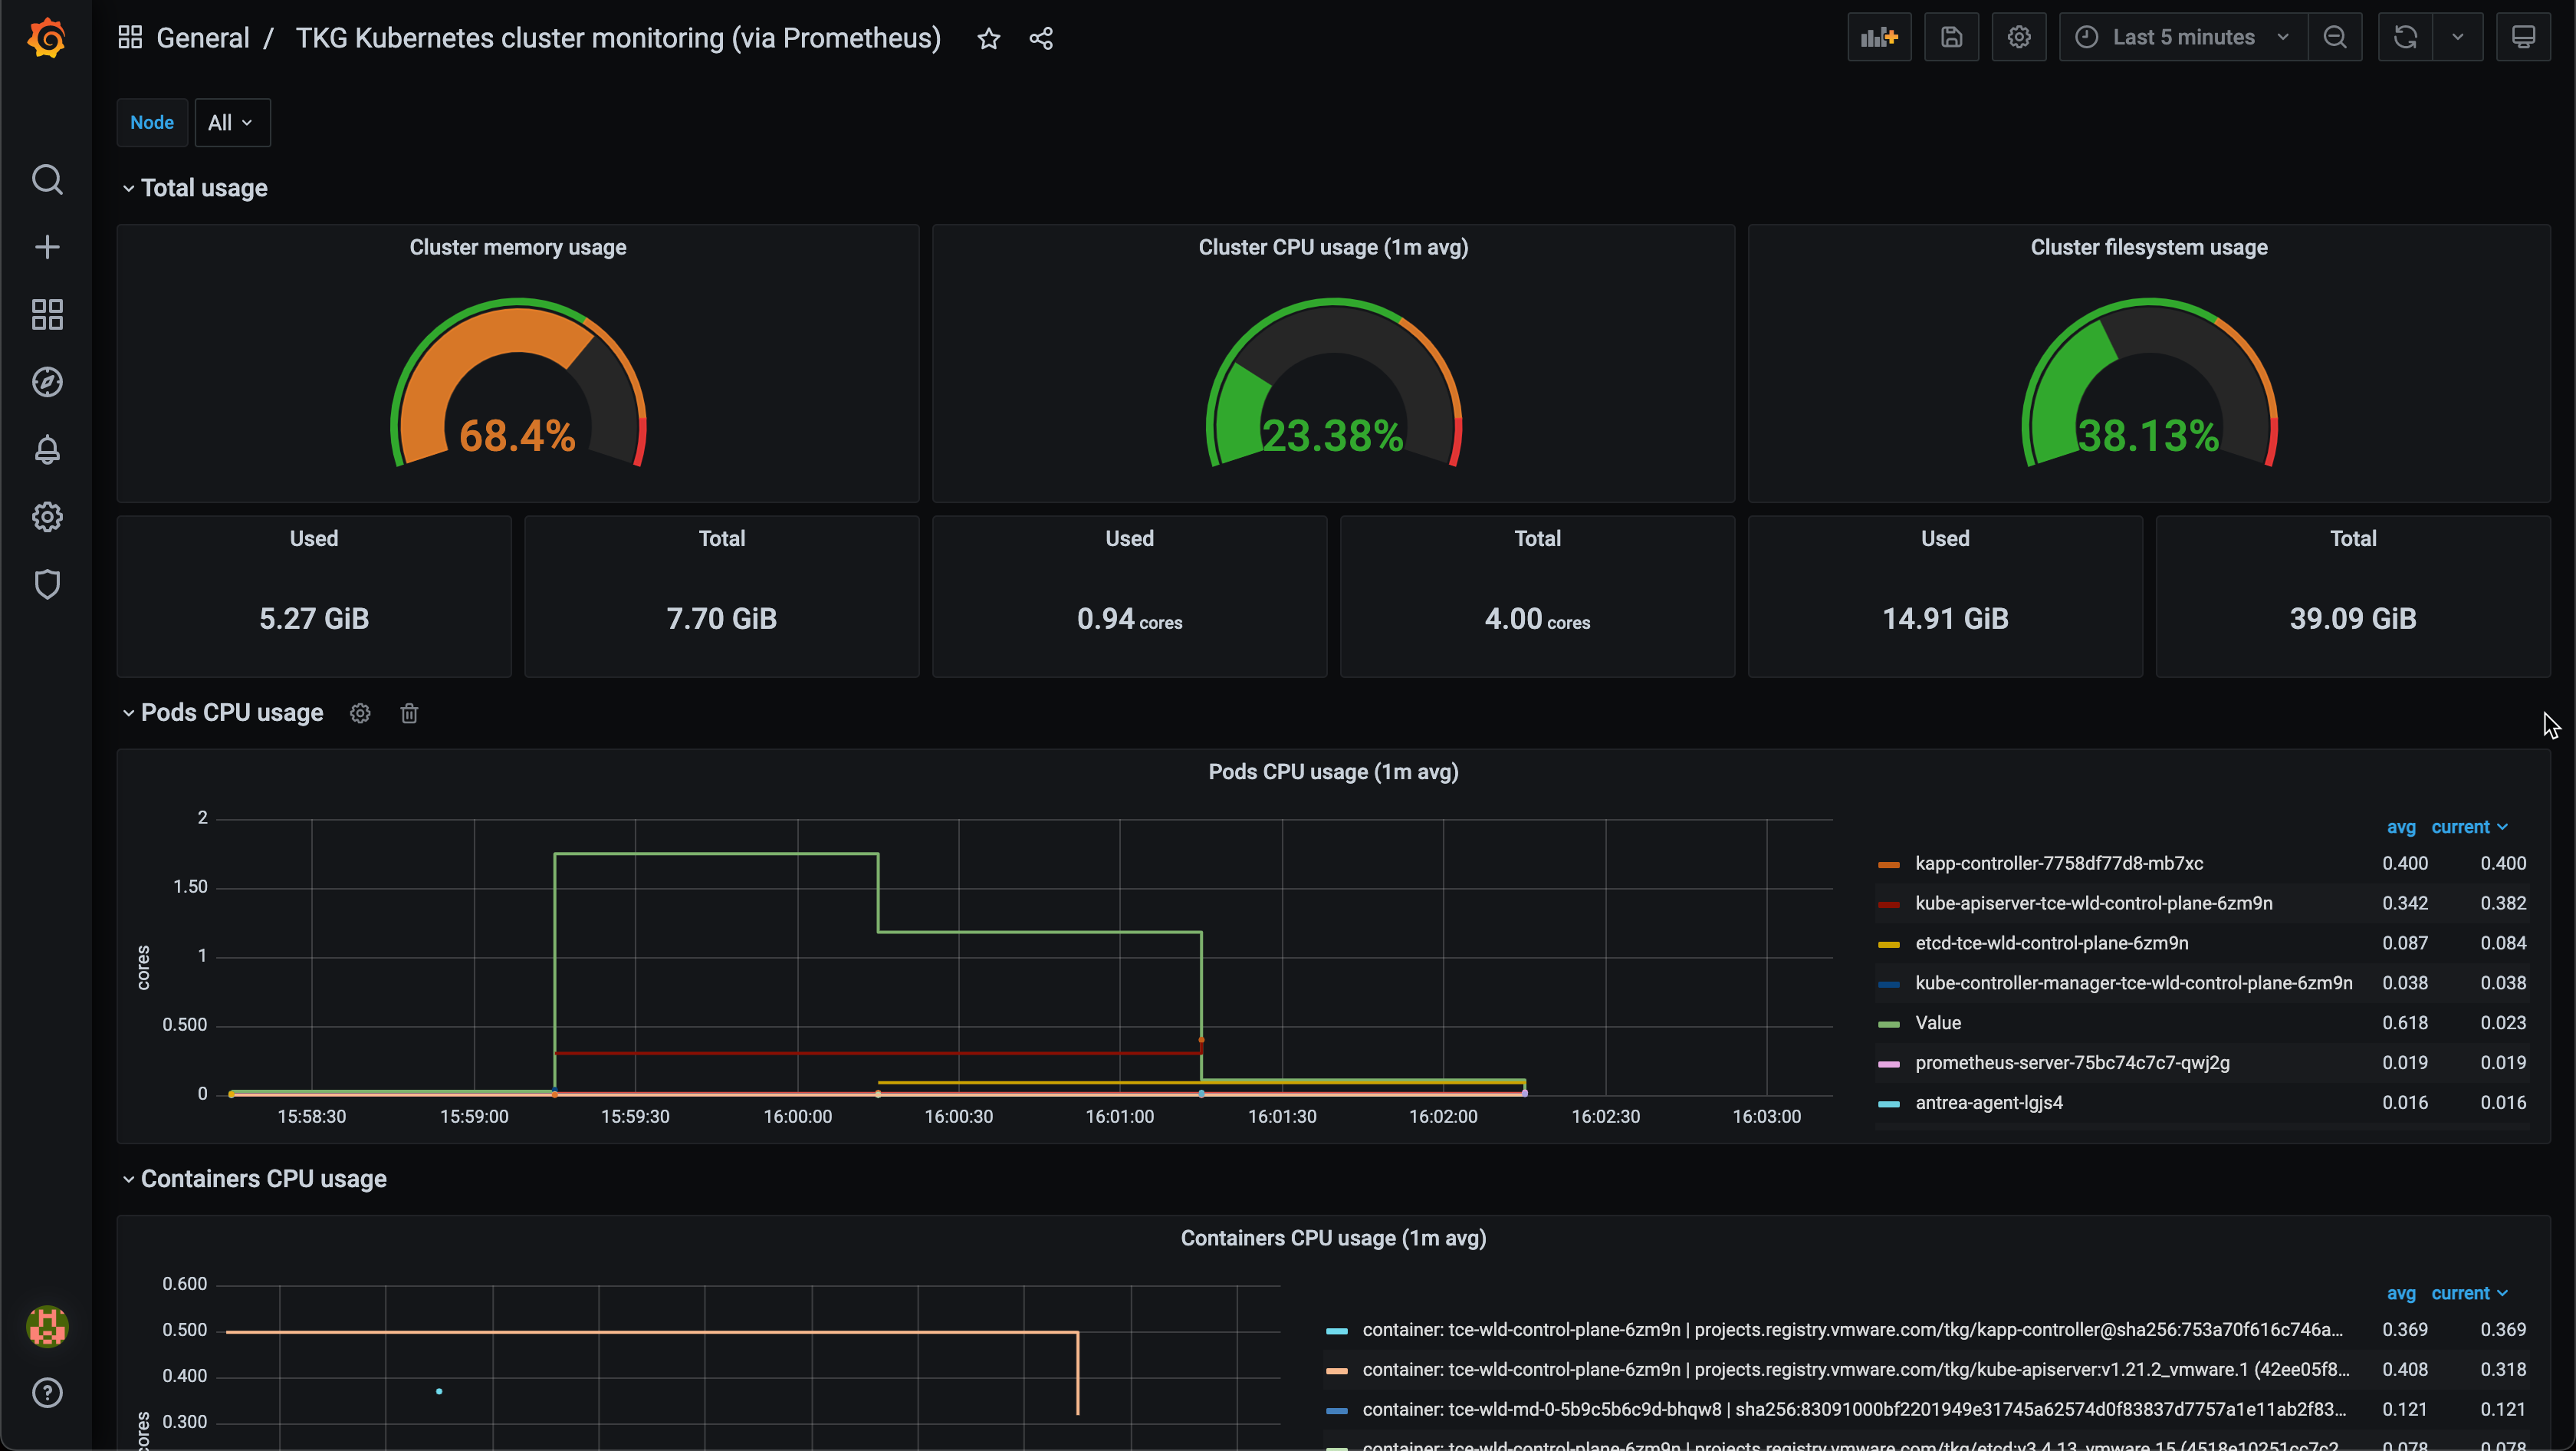 TKG cluster monitoring dashboard